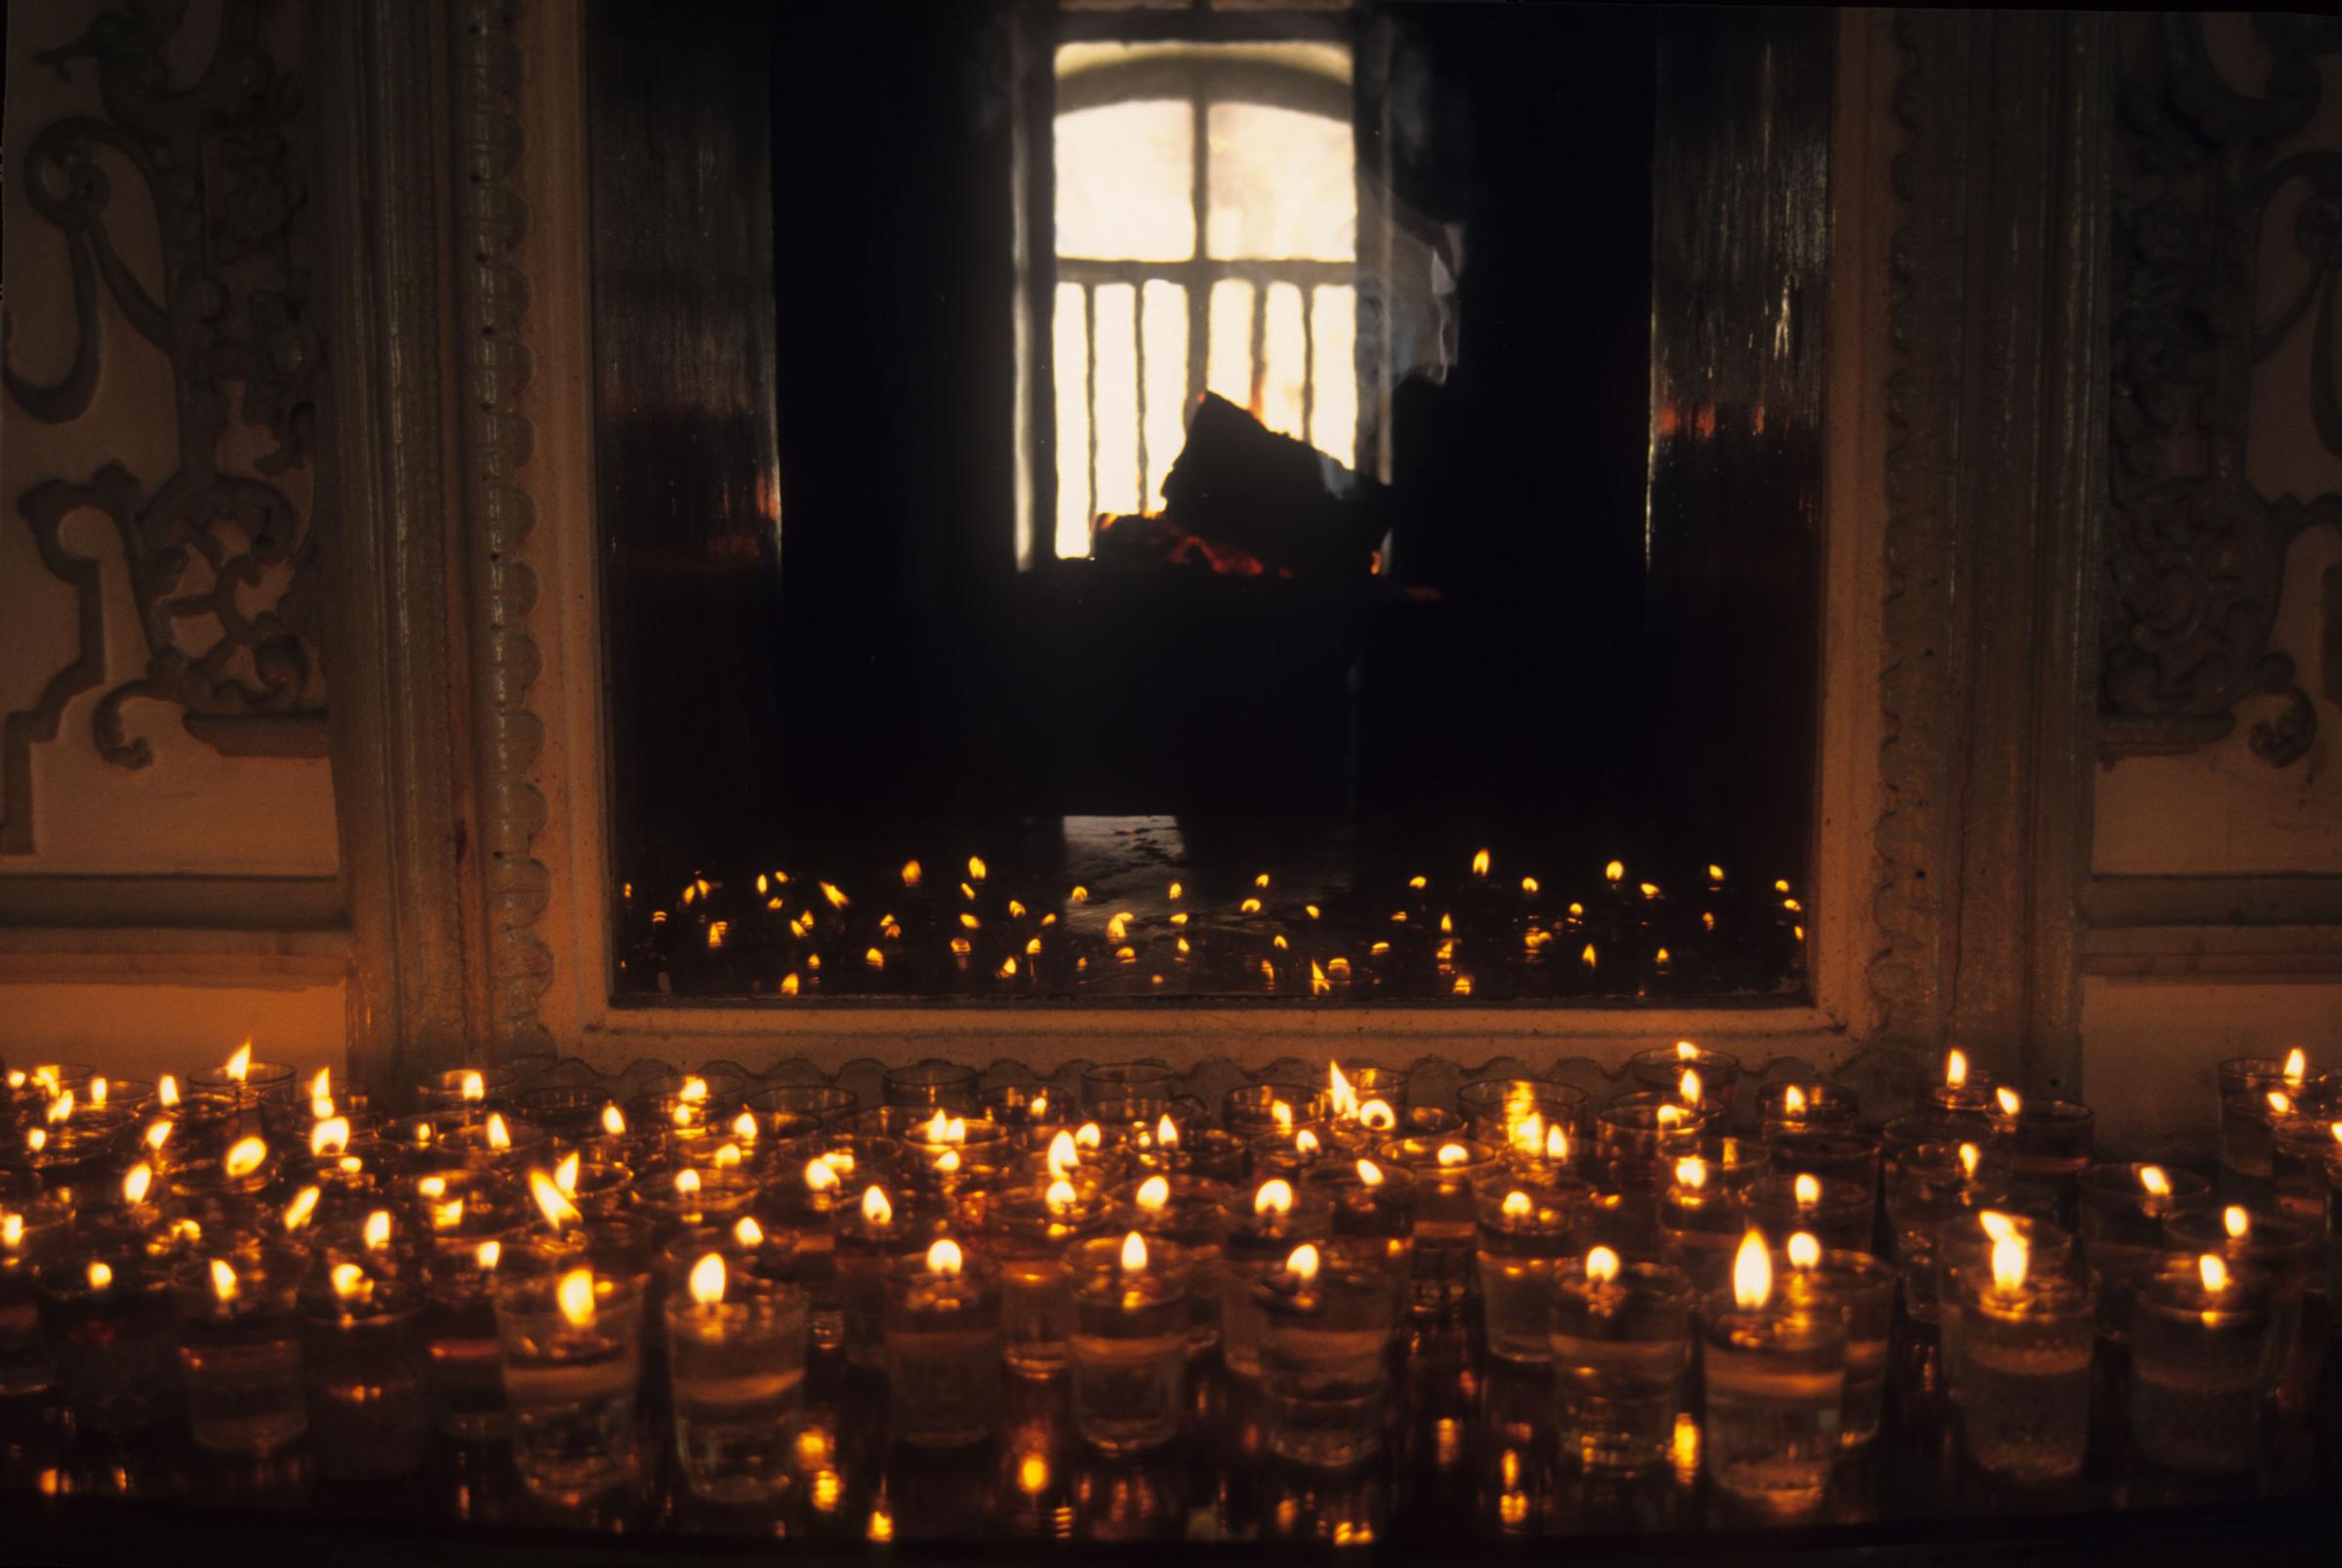 Zoroastrian Candles